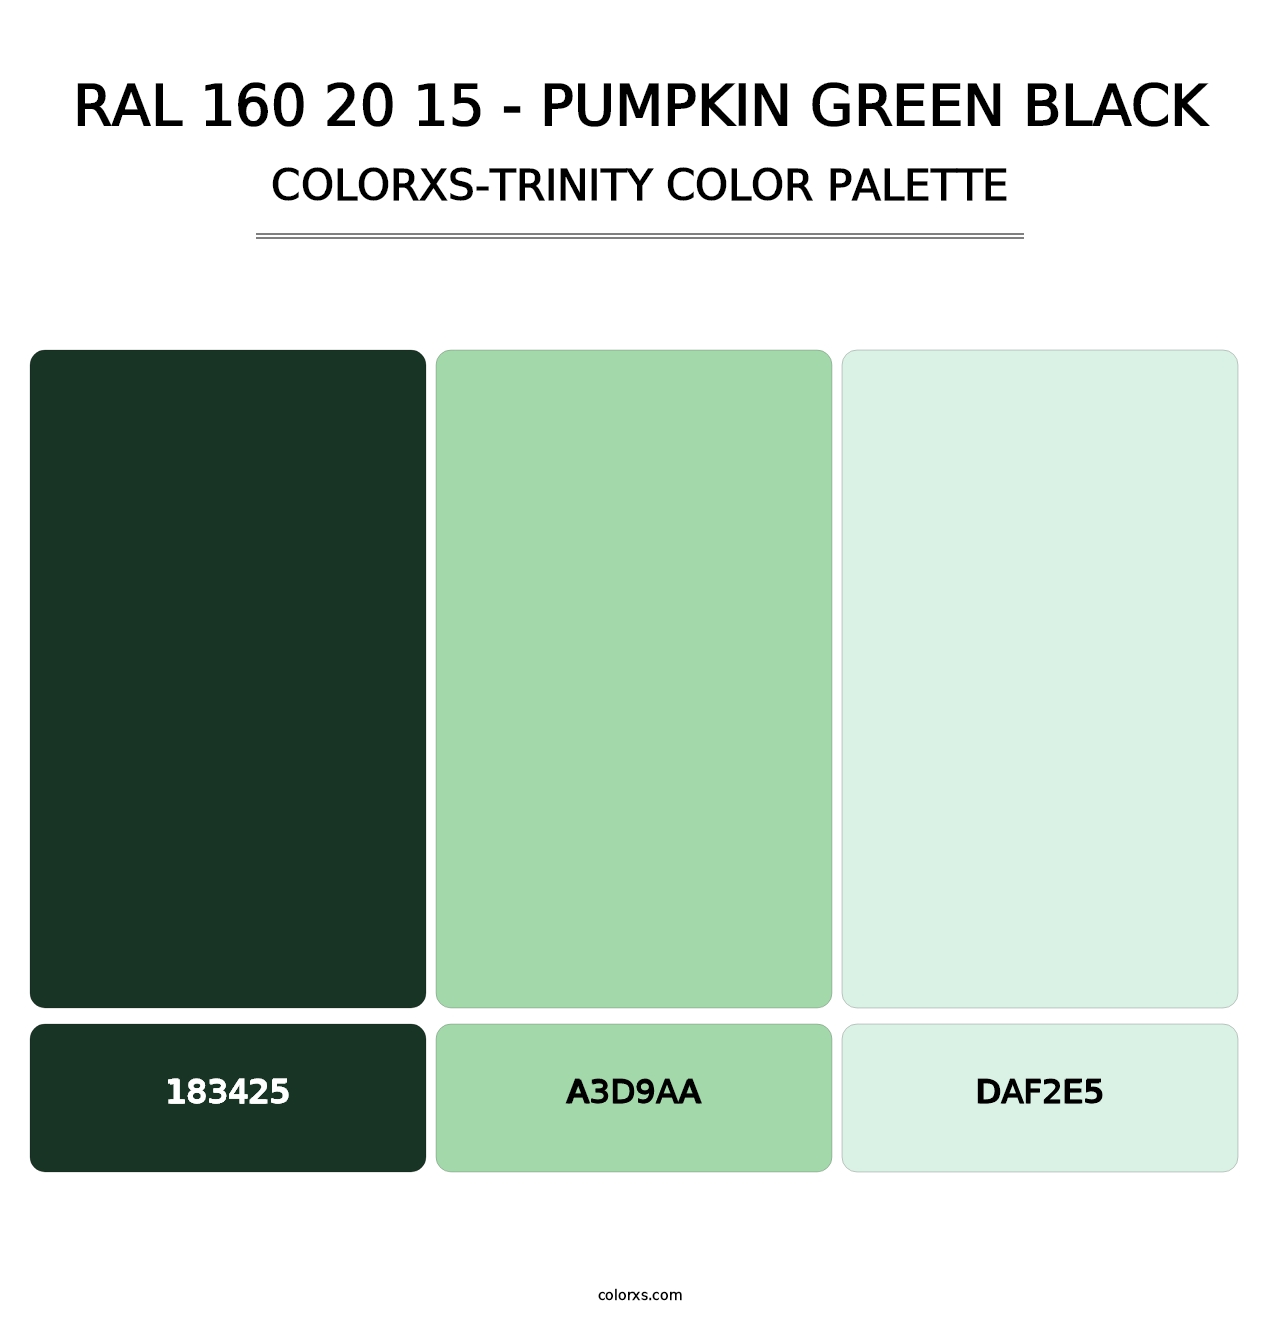 RAL 160 20 15 - Pumpkin Green Black - Colorxs Trinity Palette